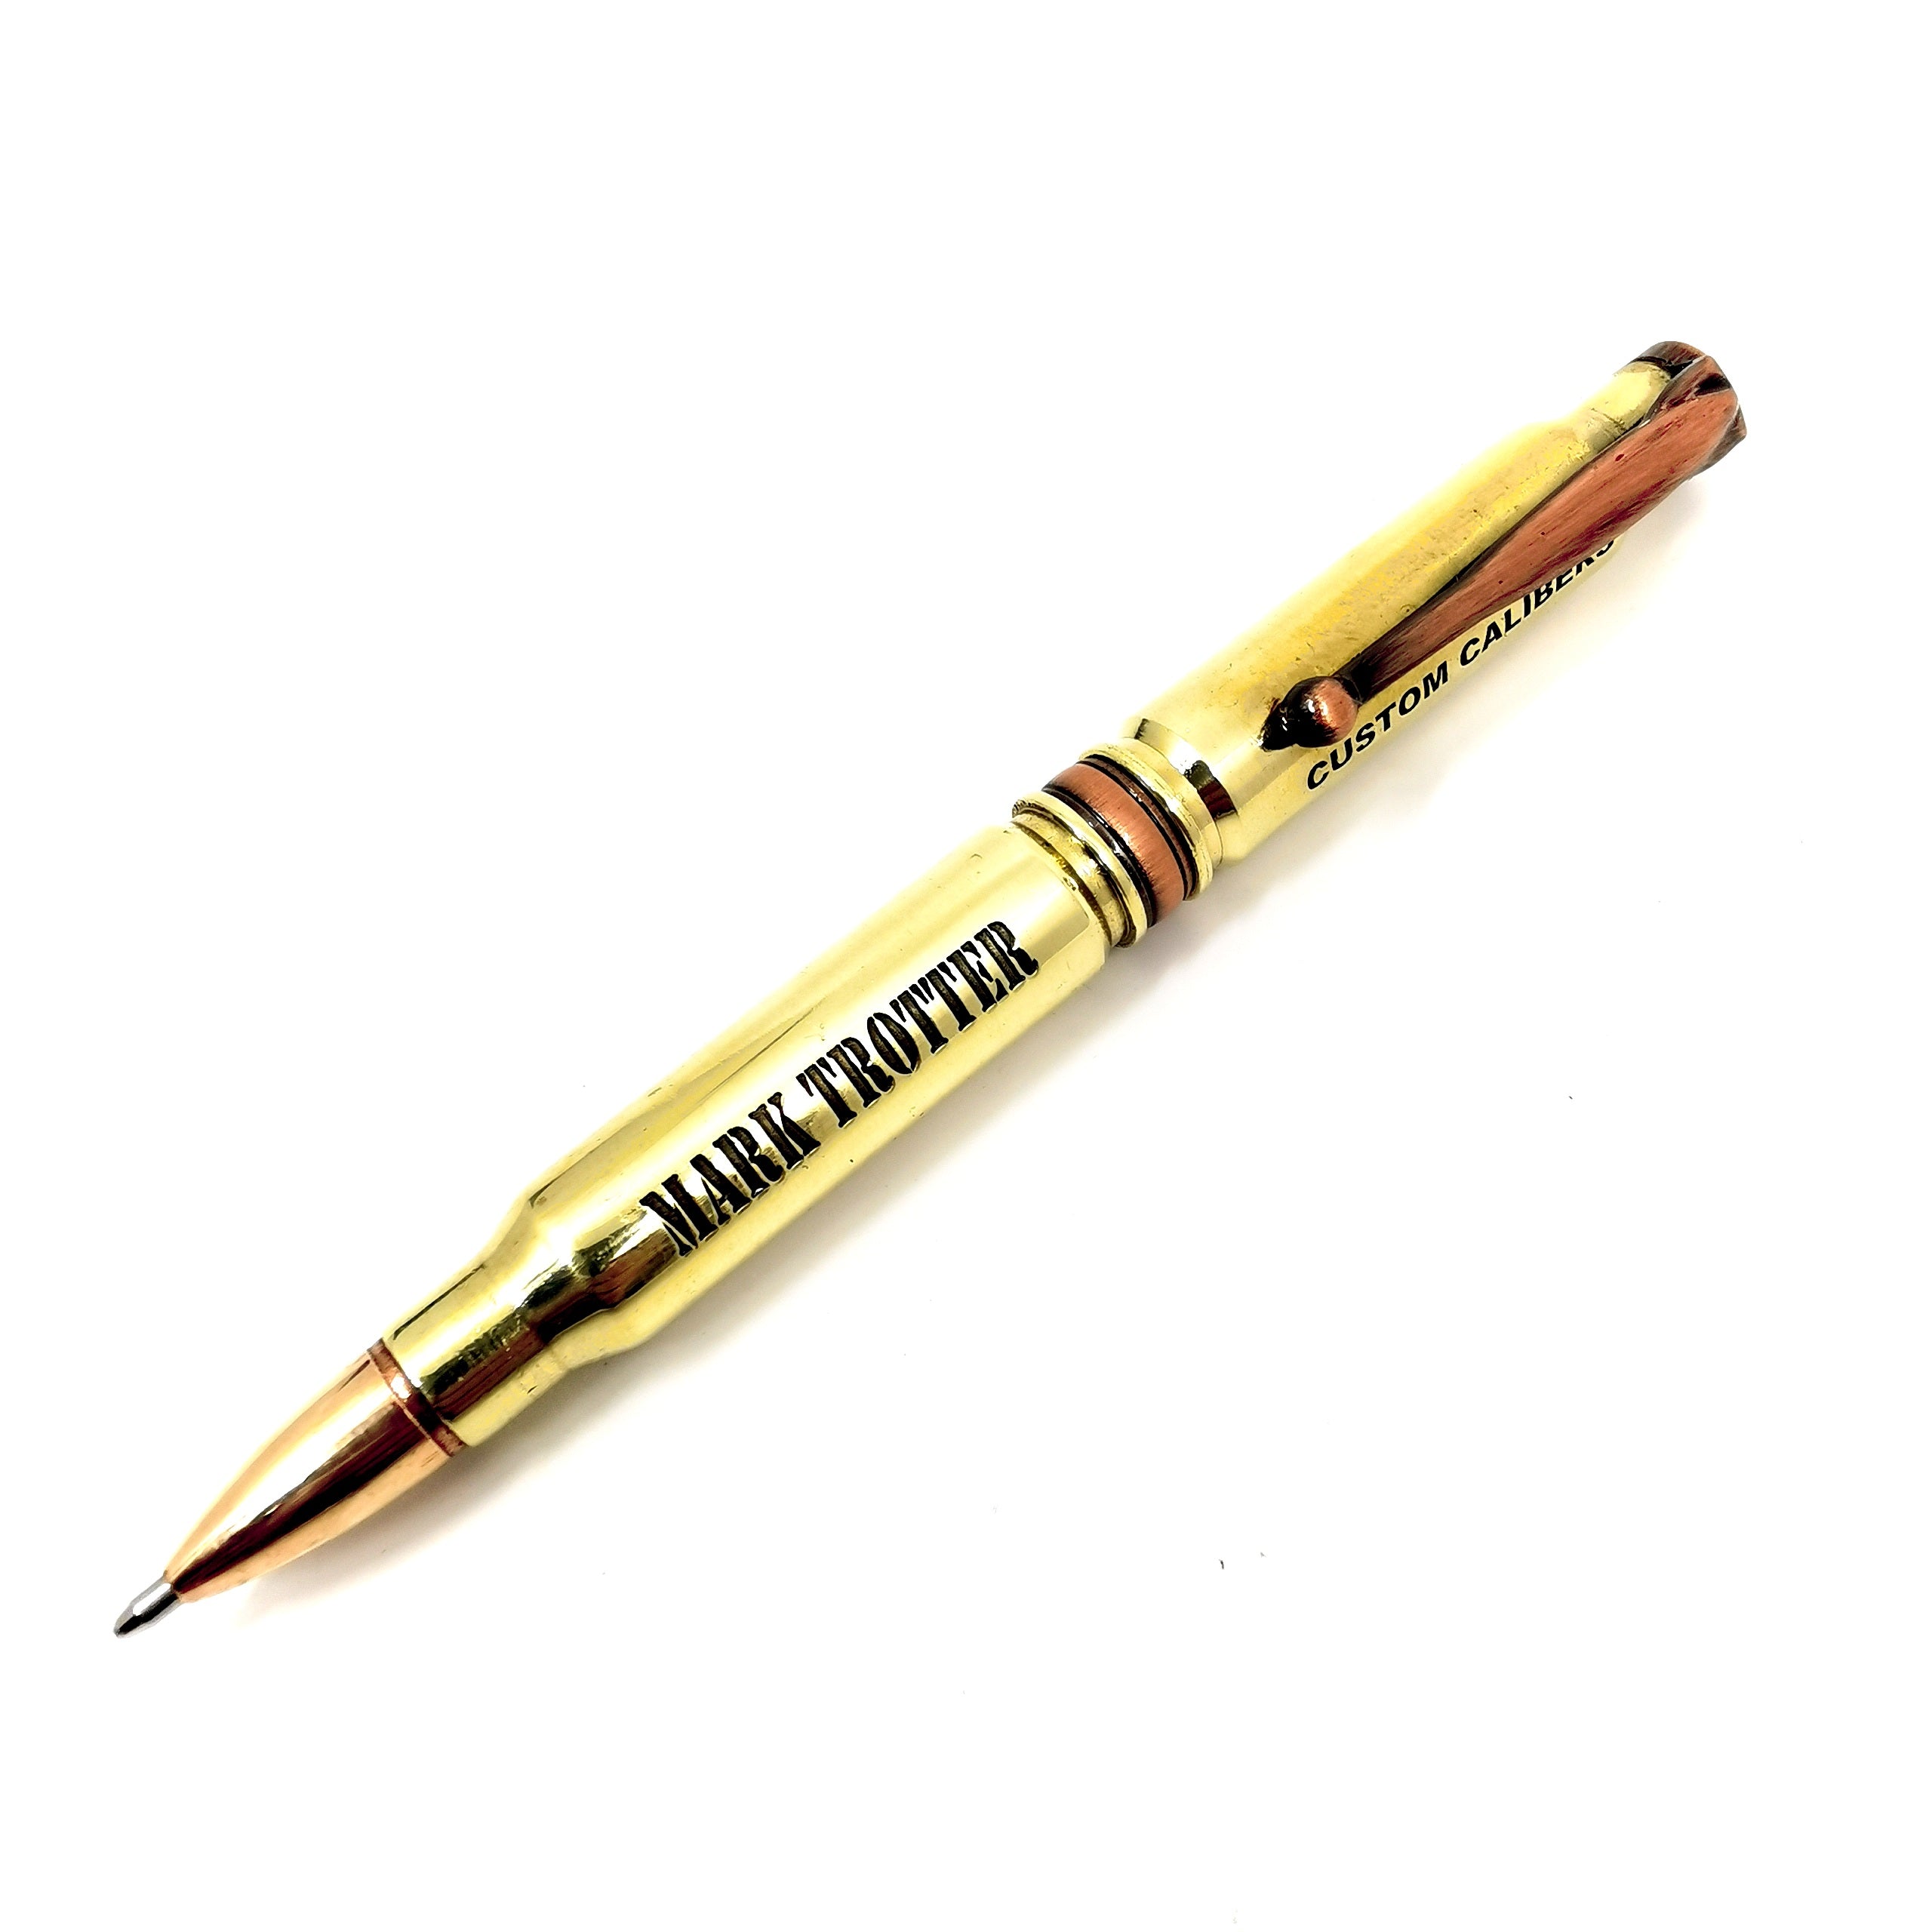 Turn a .50 Caliber Shell Into a Ballpoint Pen